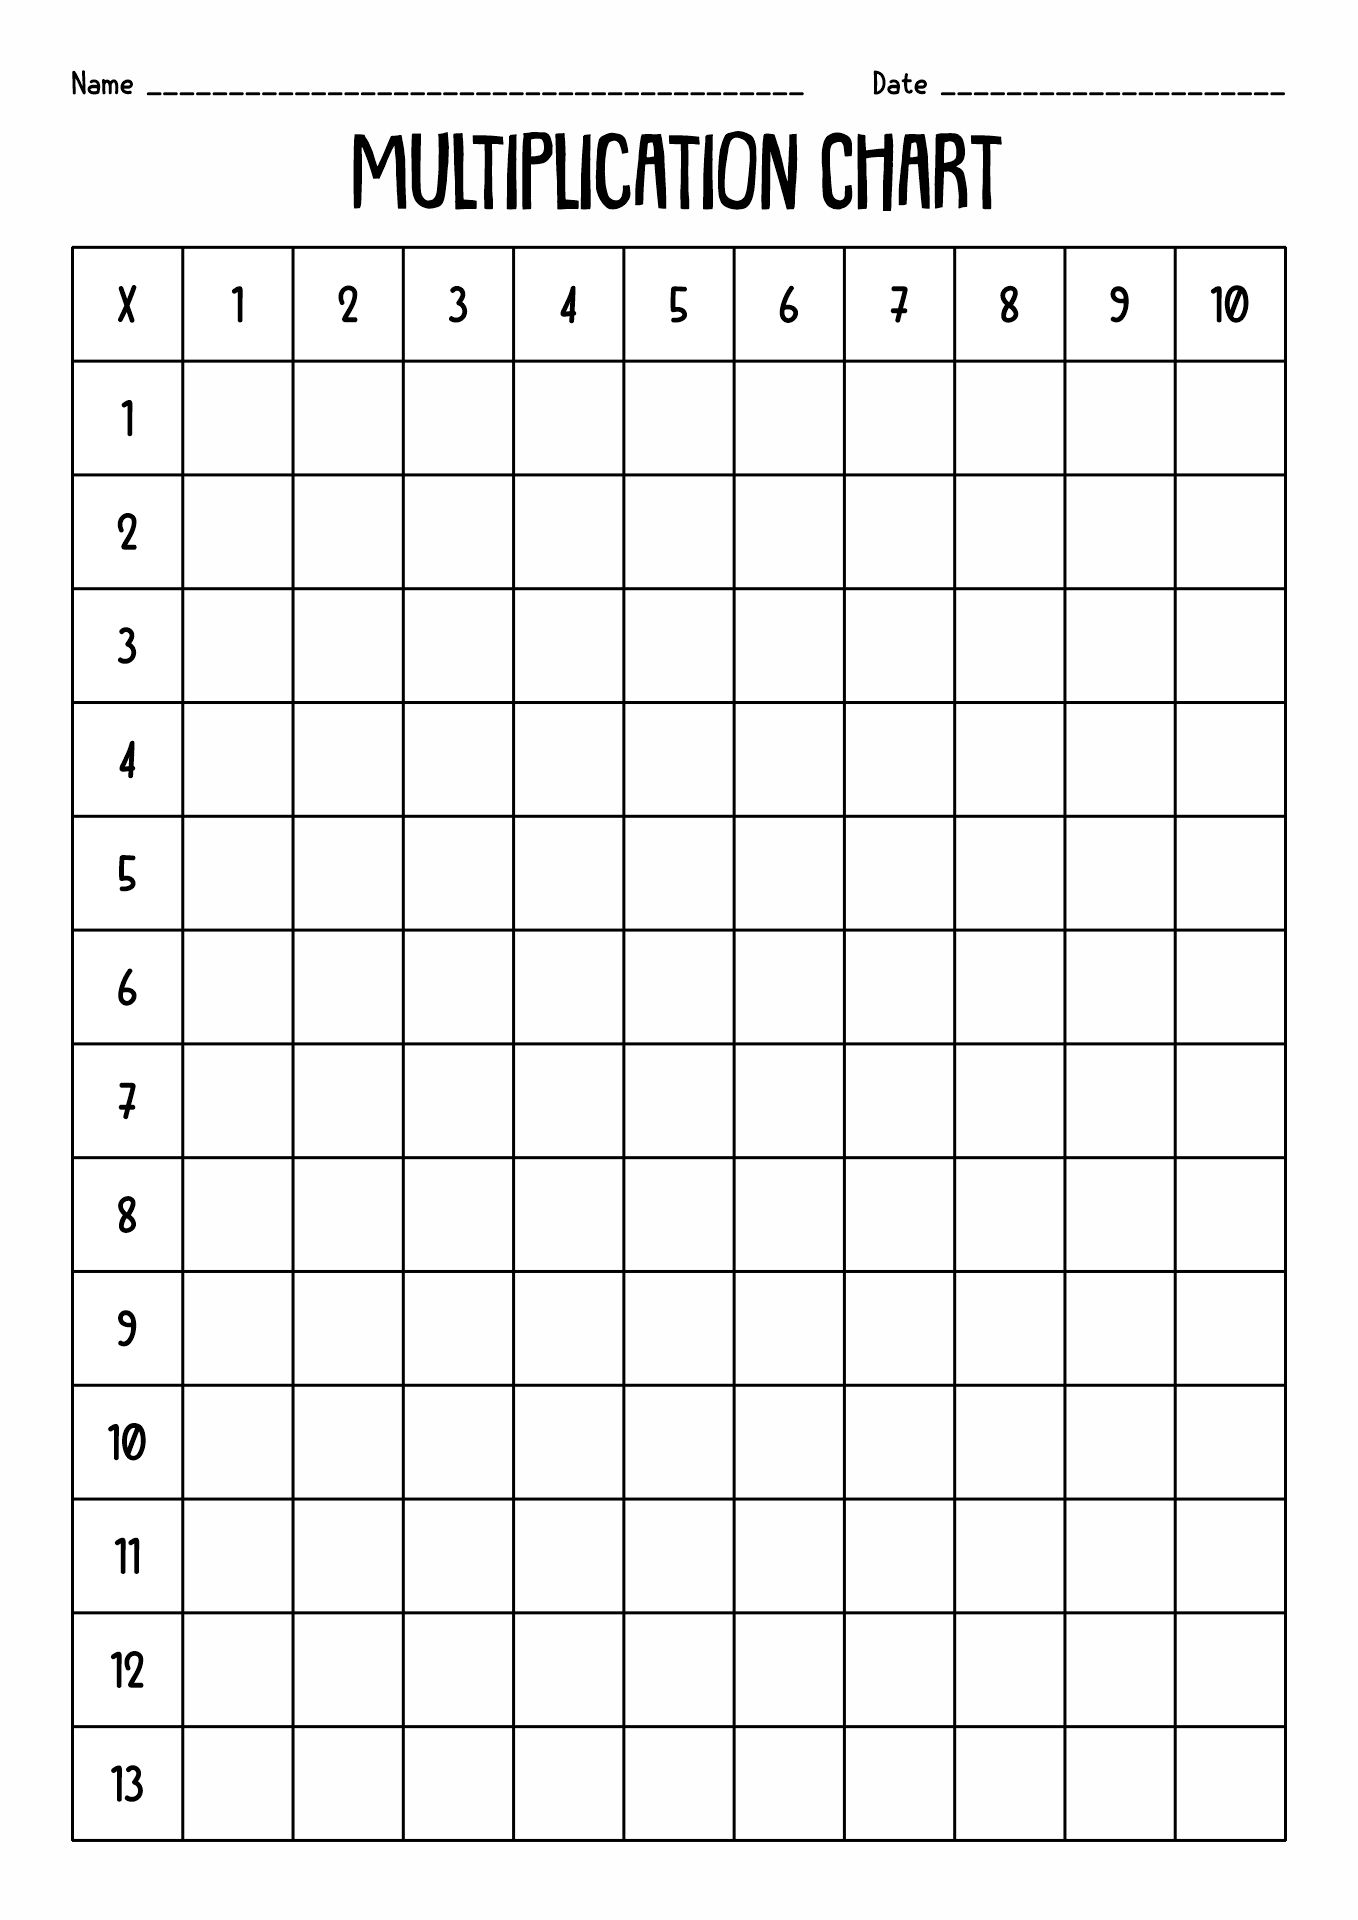 Blank Times Table Worksheet Image